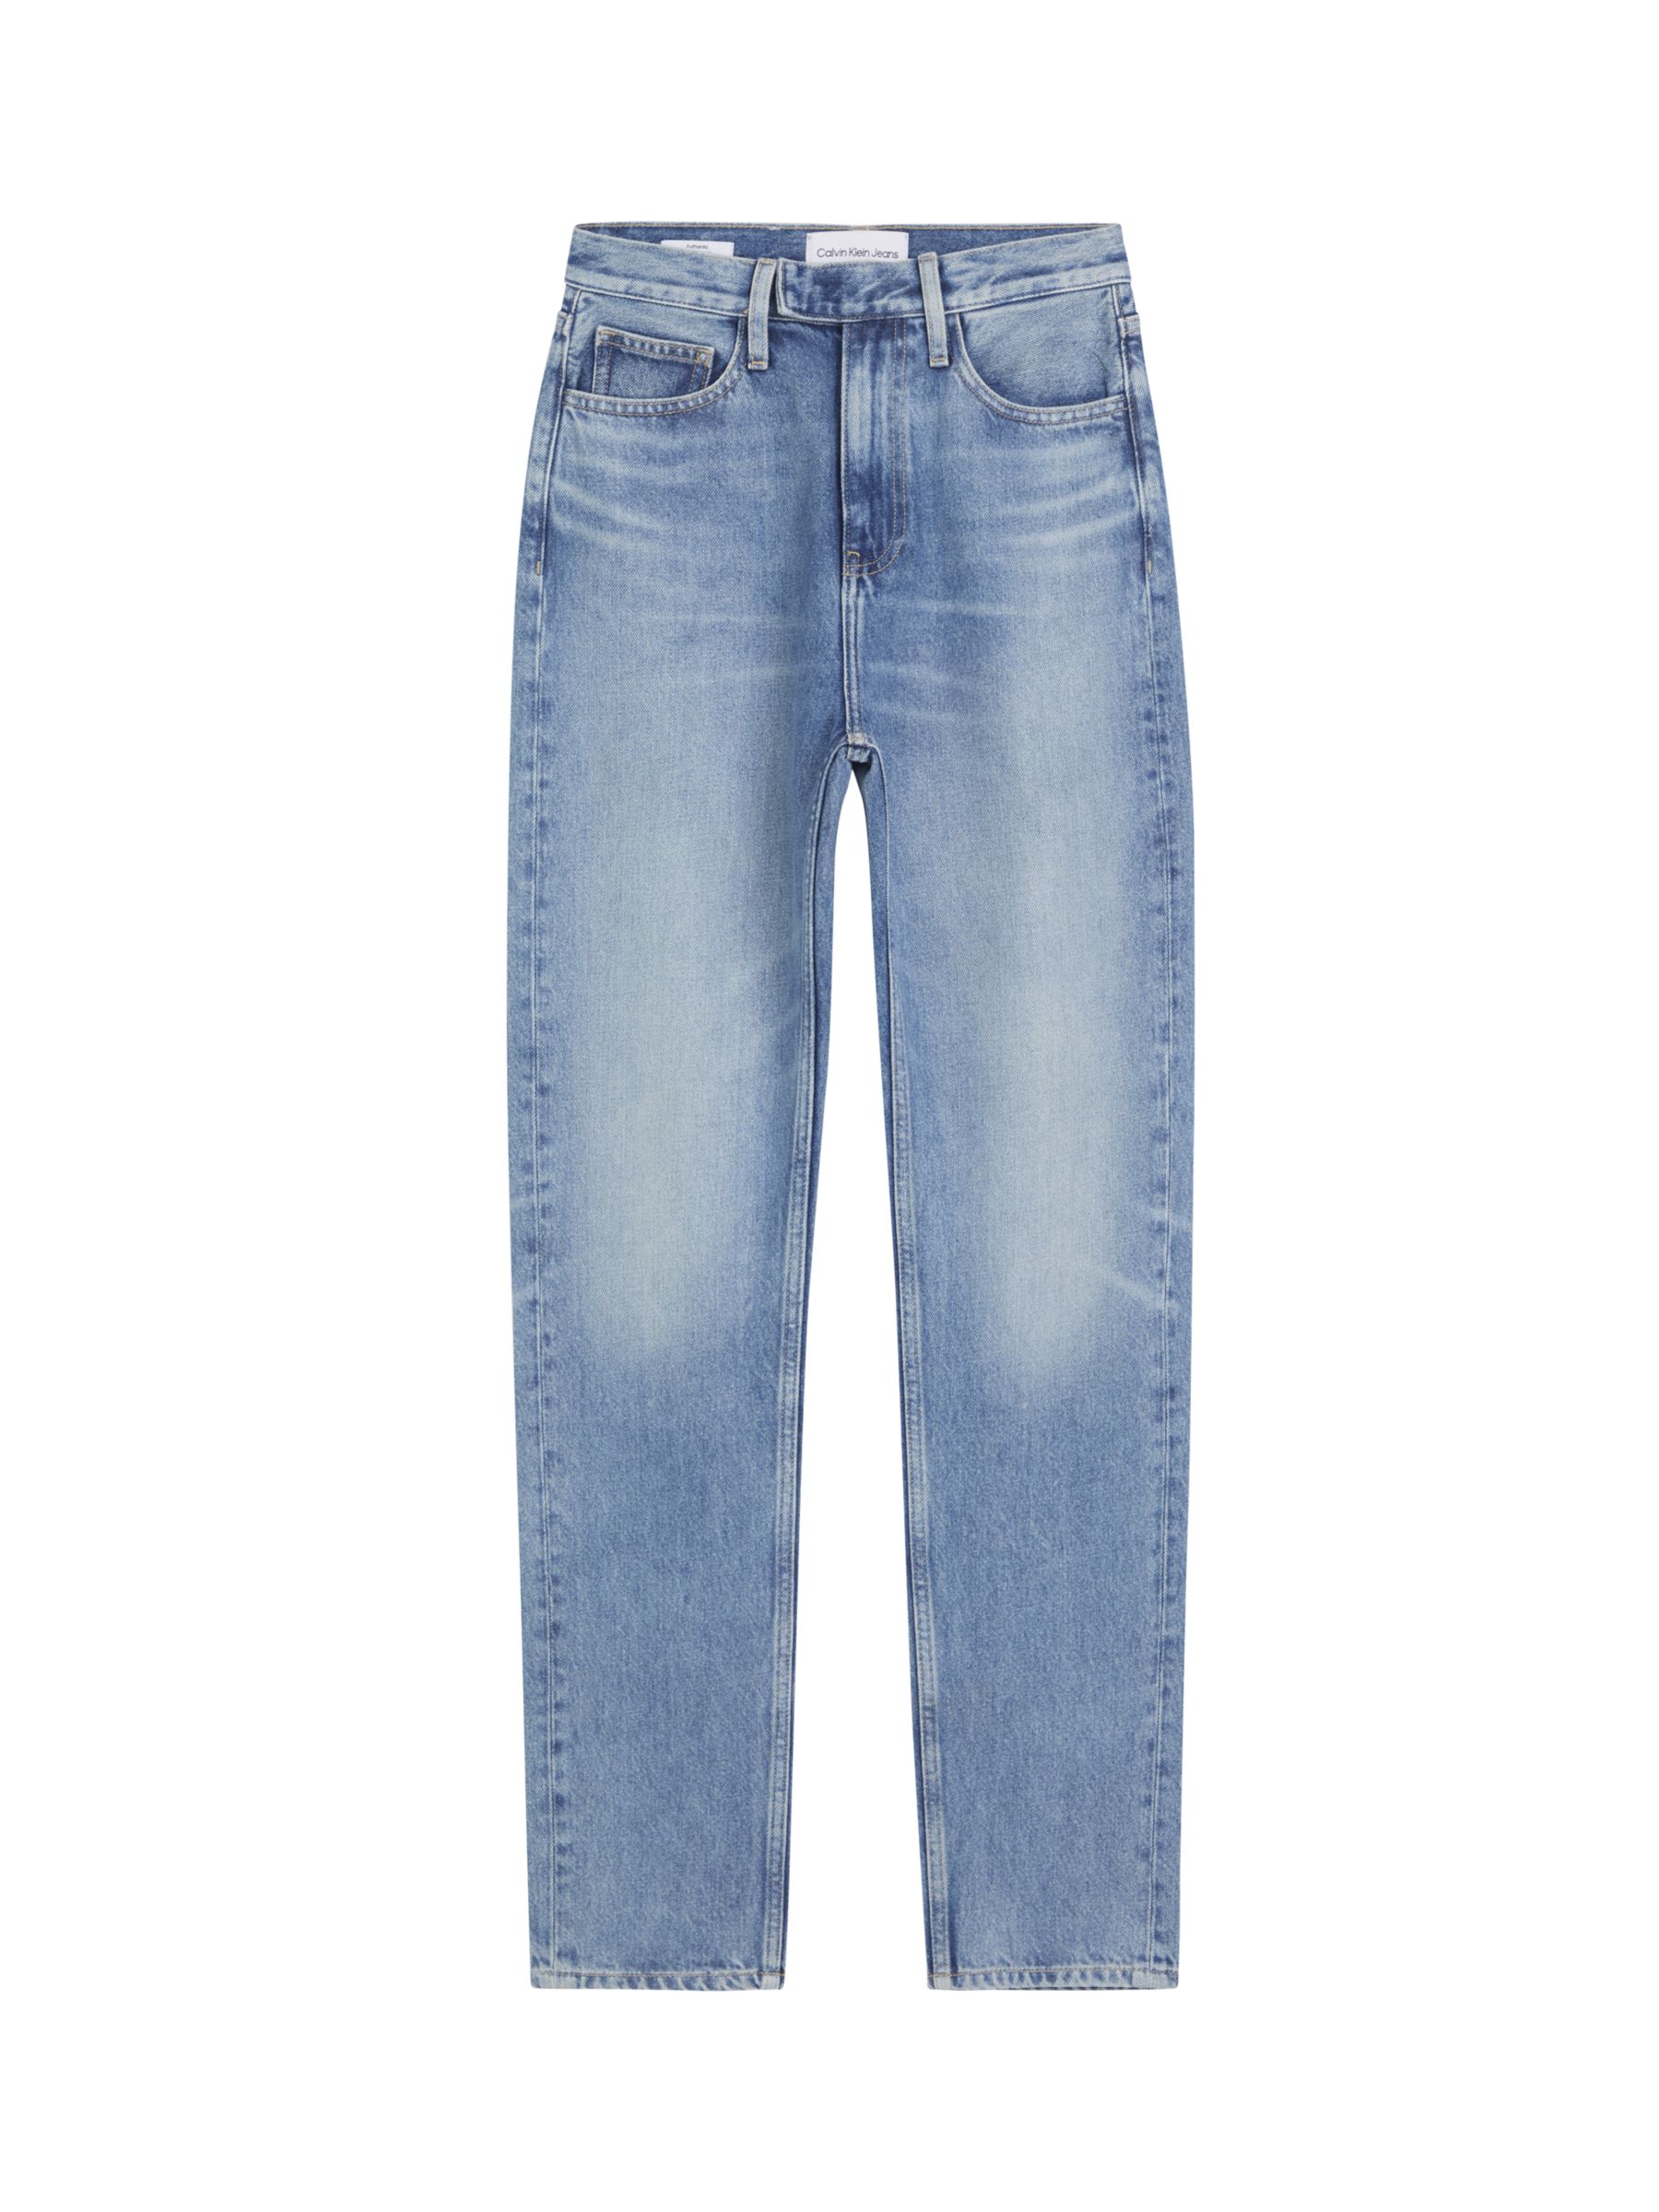 Calvin Klein Authentic Slim Jeans, Mid Blue at John Lewis & Partners